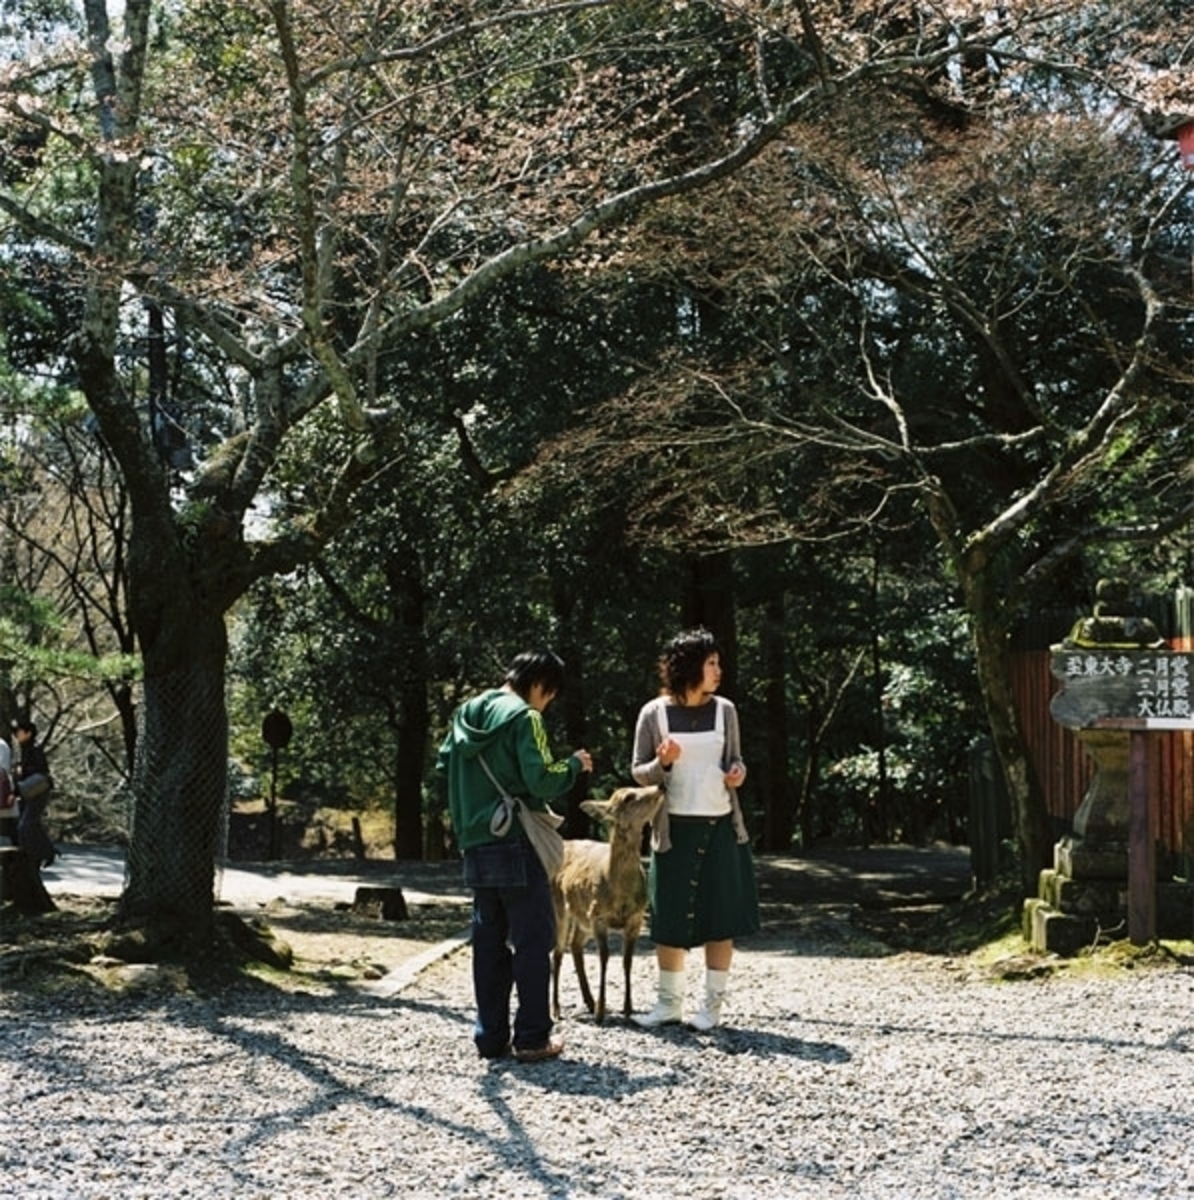 Young Couple with Deer, Nara